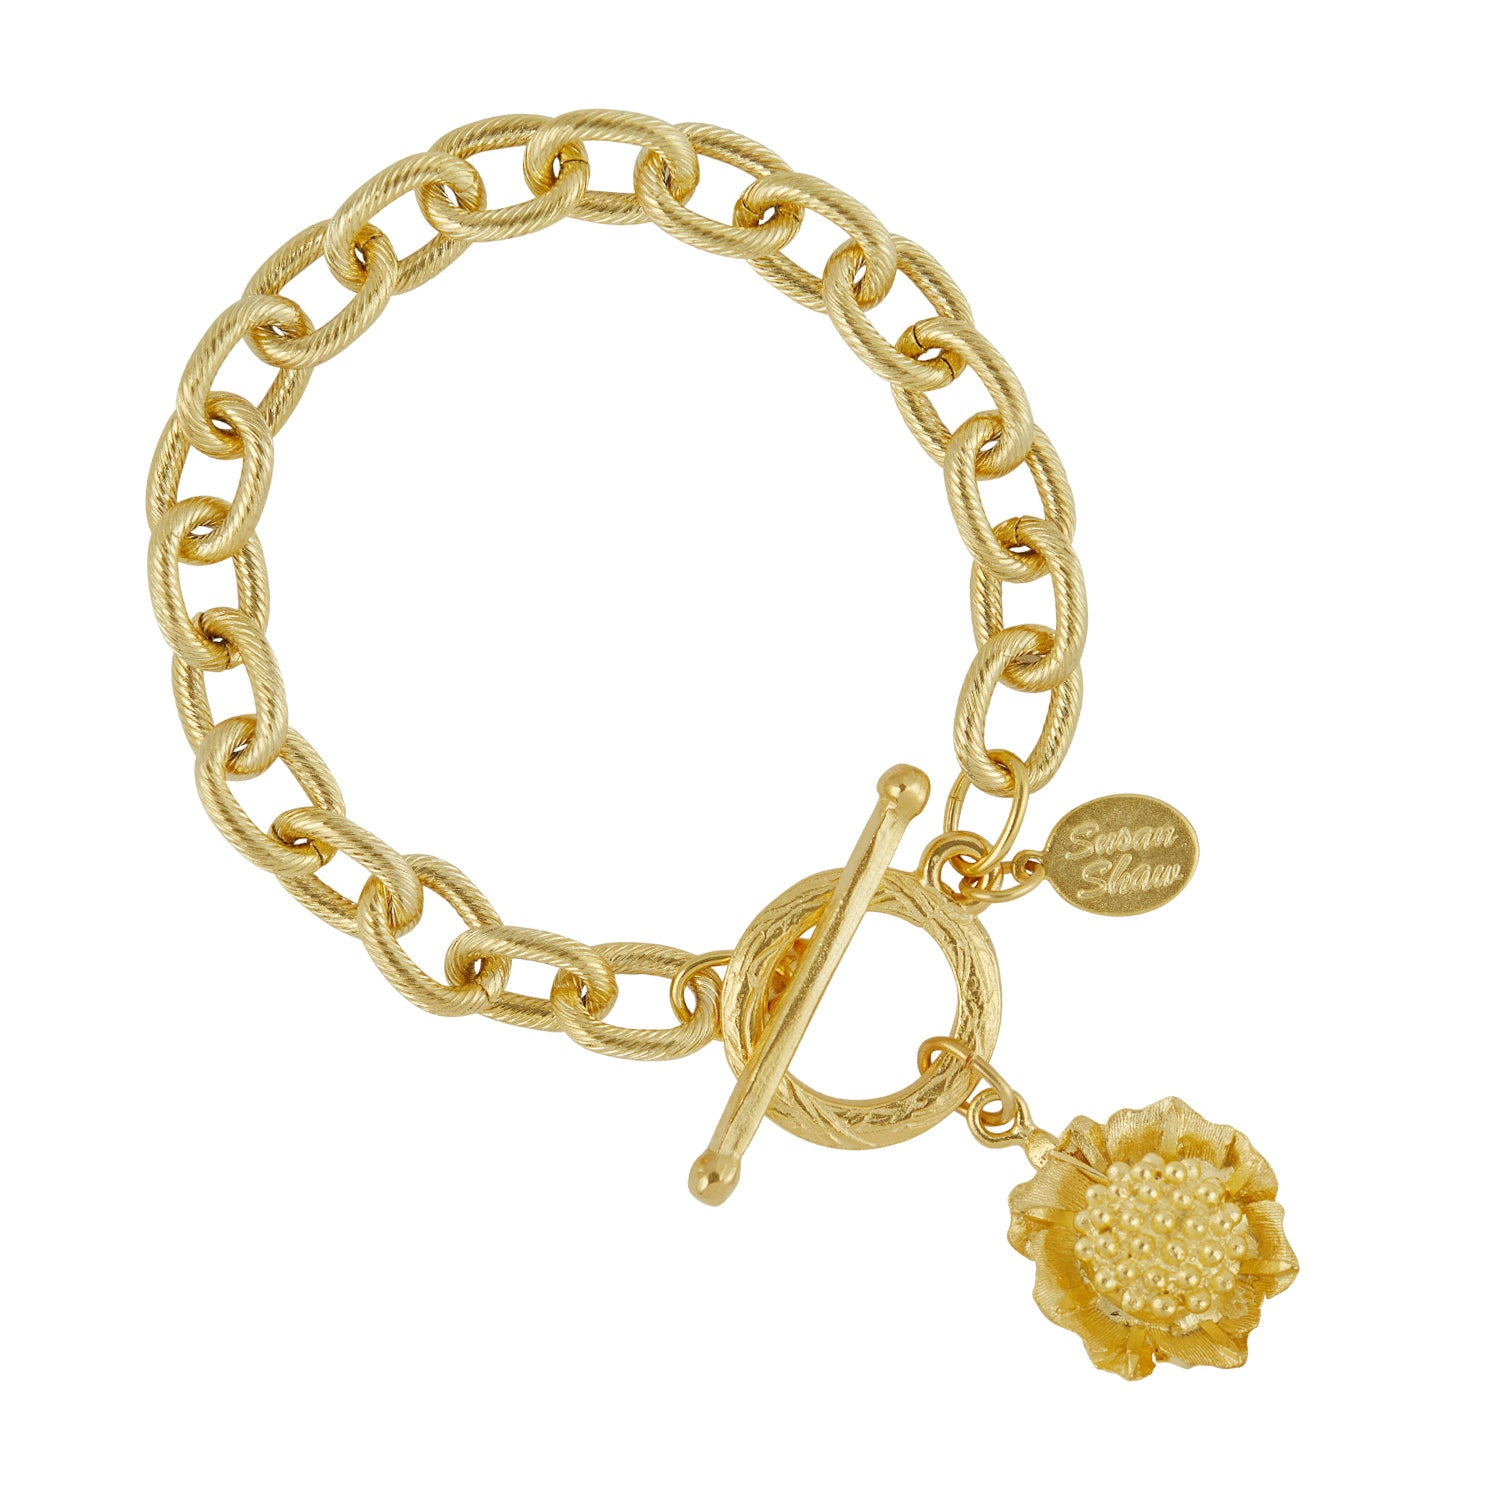 Susan Shaw Camellia Chain Toggle Bracelet